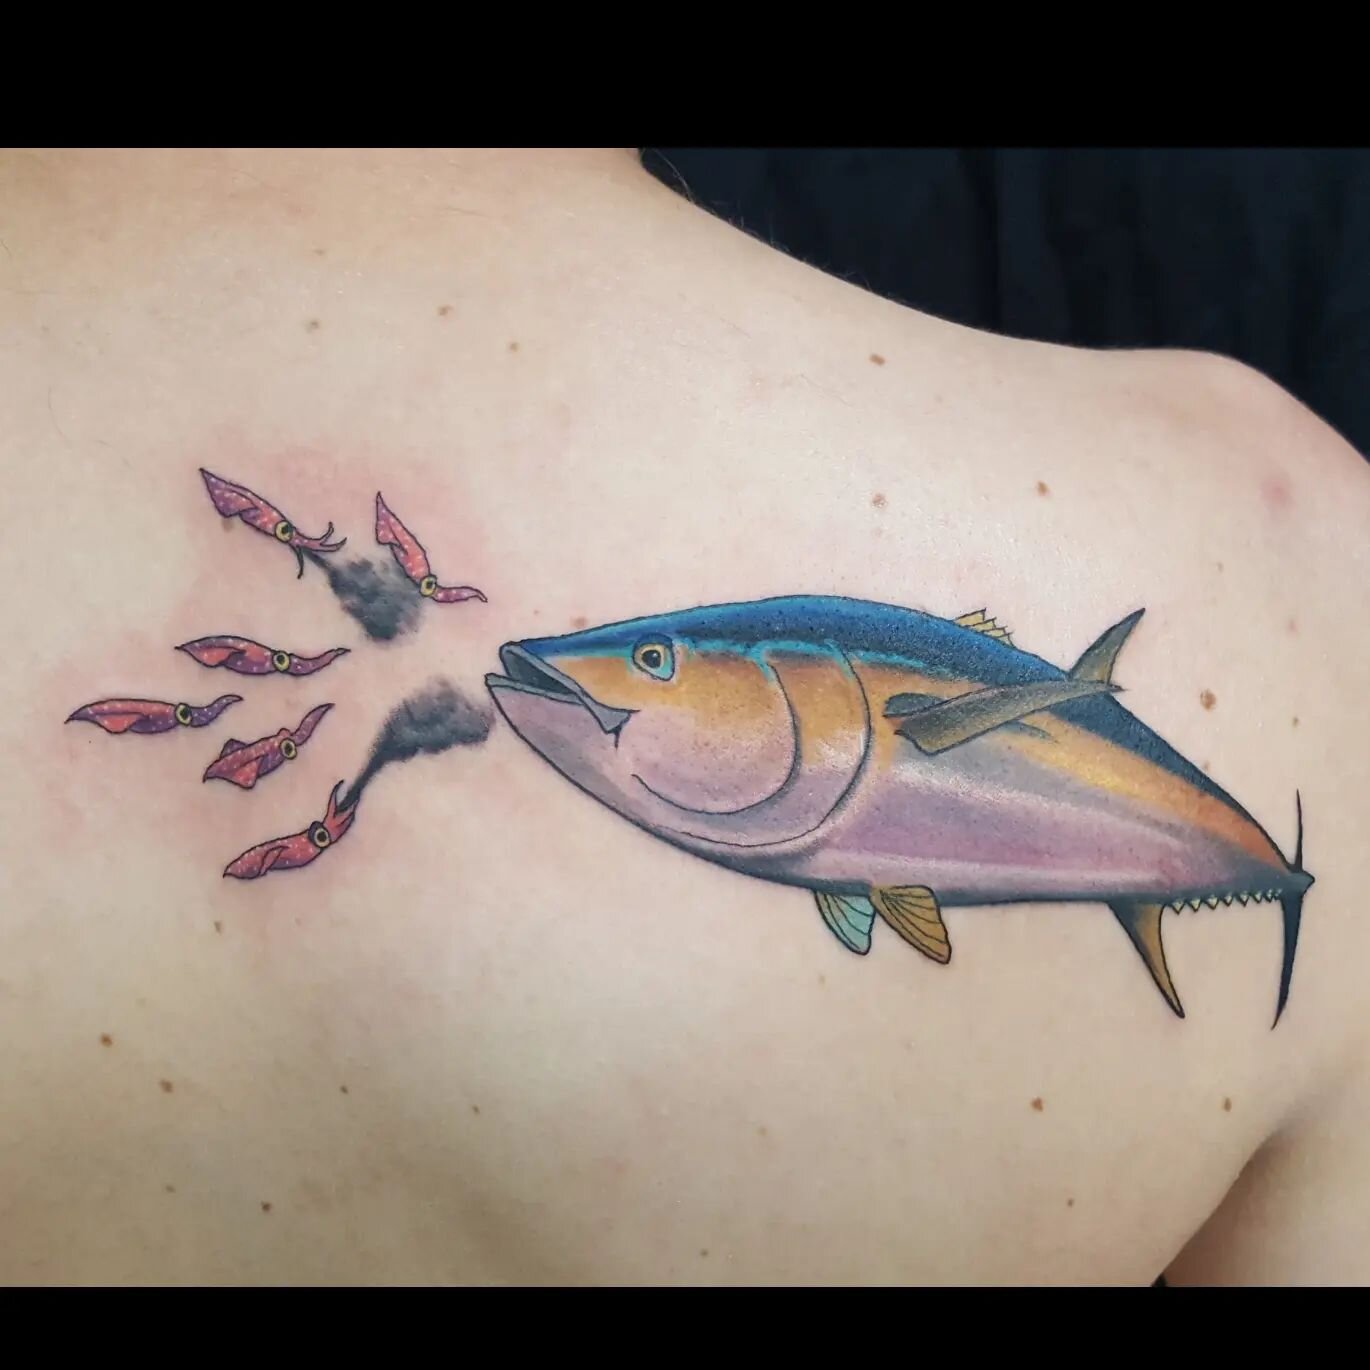 ifa2 tattoo studio on Twitter By jayinkfiend bluefintuna coralreef  tattoo aquatictattoo fishtattoo  See more at httpstcotO0UJZOCgS  httpstcoutDy6BcV2E  Twitter